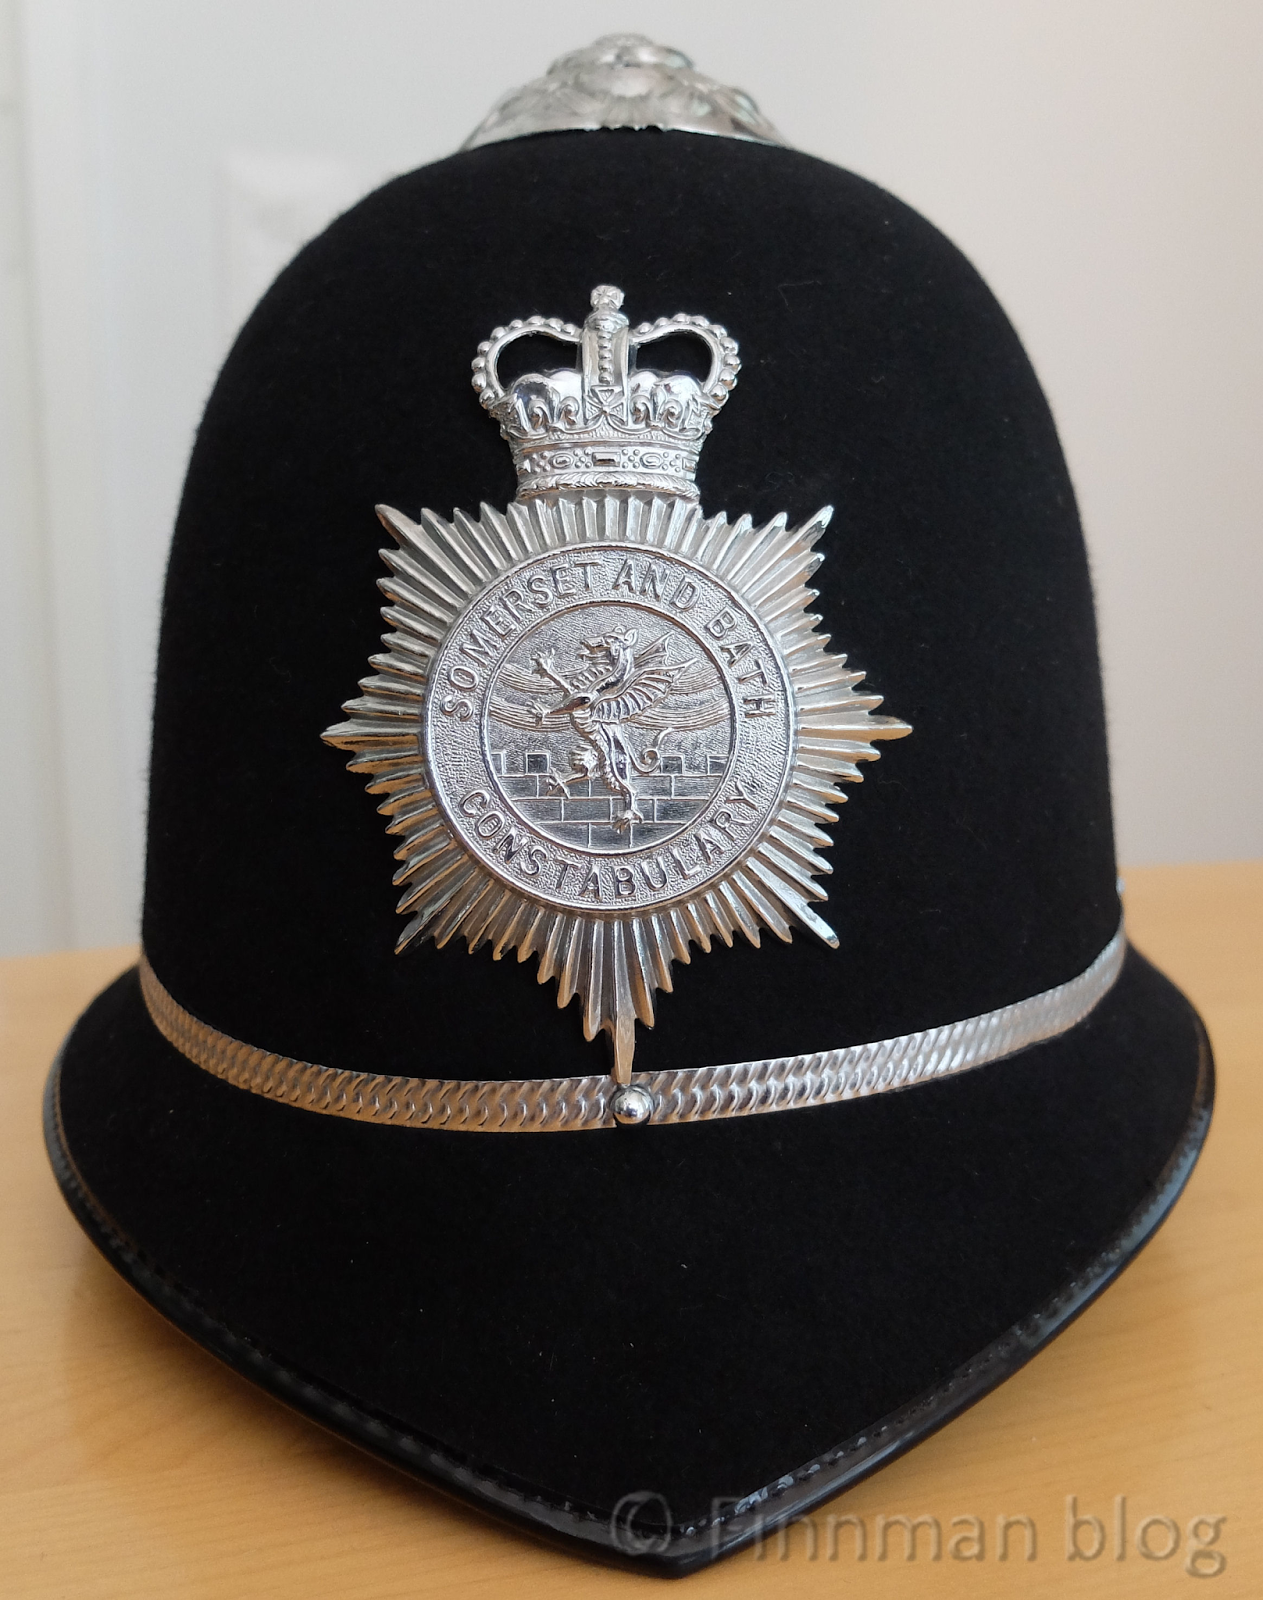 Avon & Somerset Constabulary: Somerset & Bath Constabulary